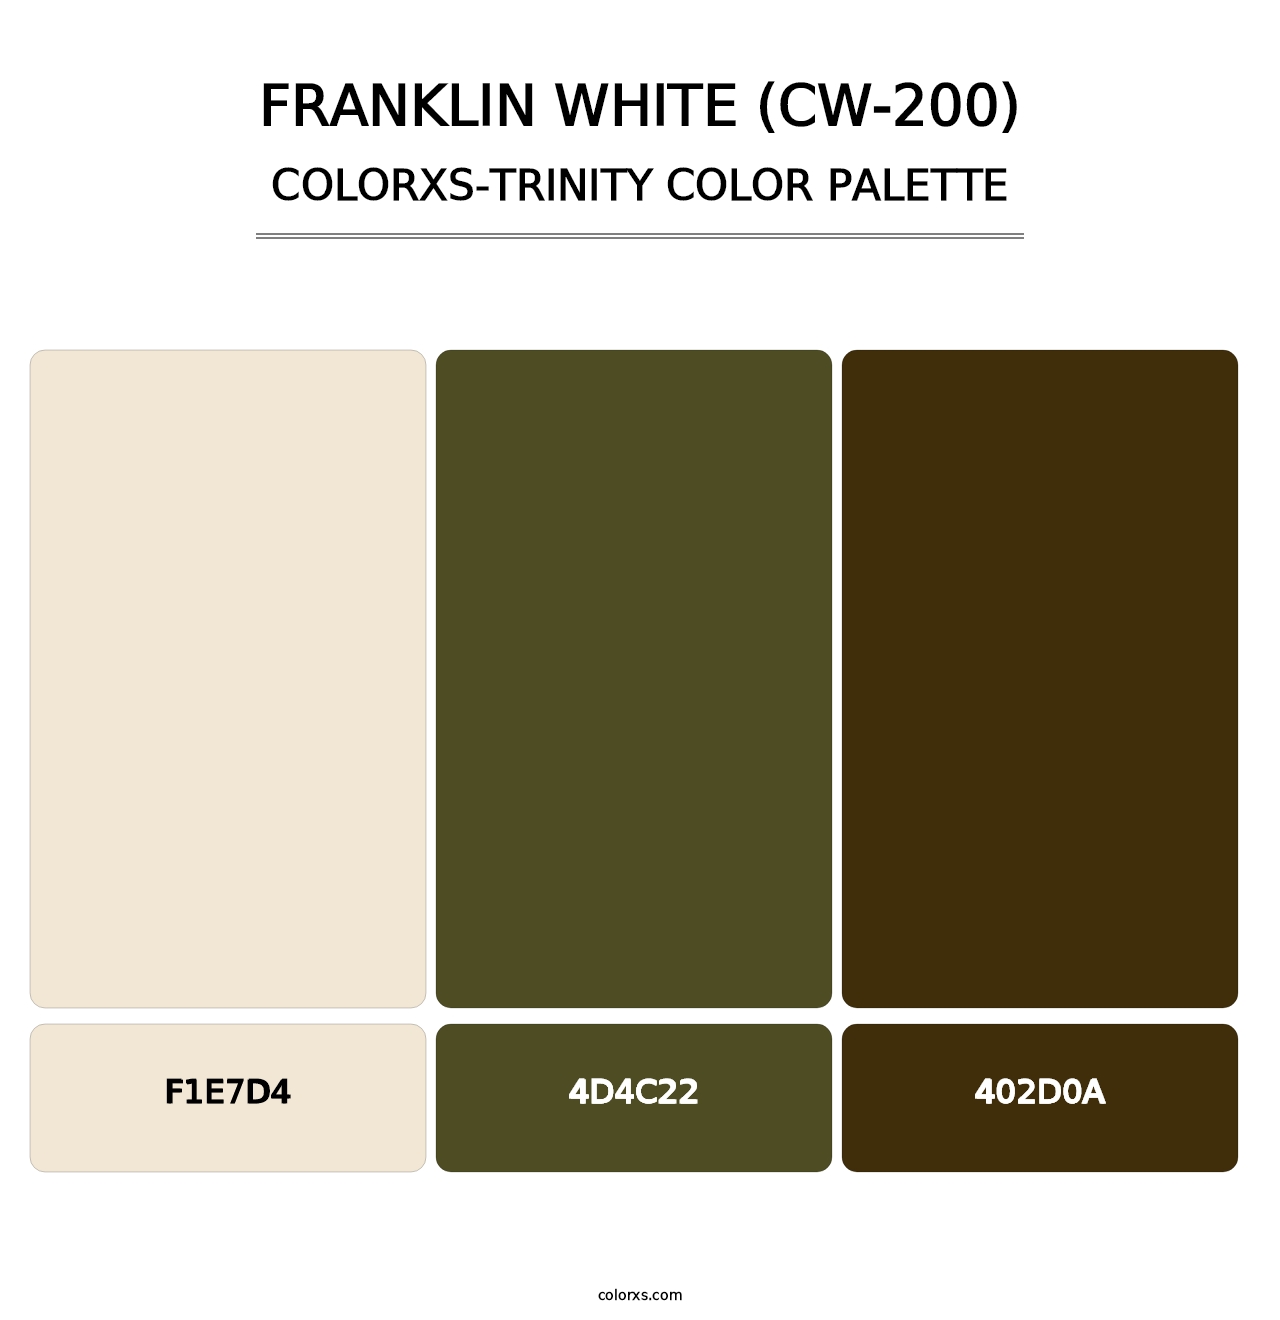 Franklin White (CW-200) - Colorxs Trinity Palette